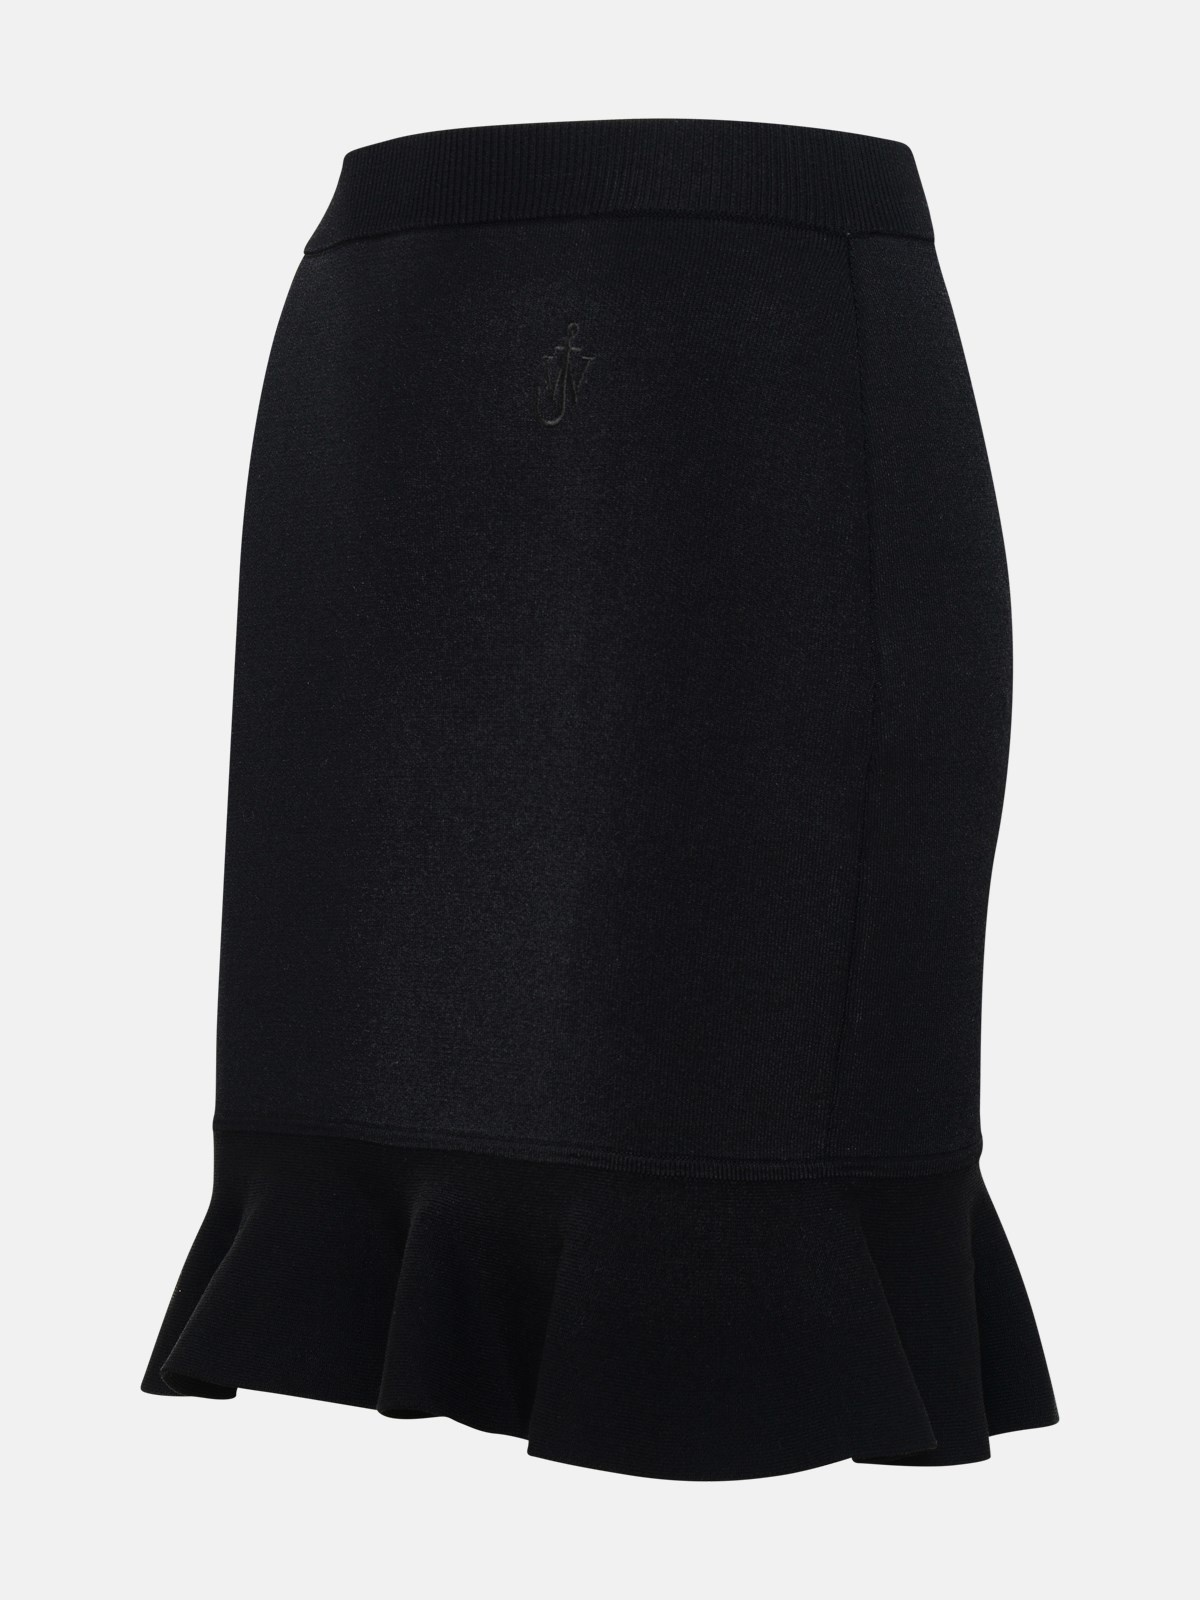 Black viscose blend skirt - 2